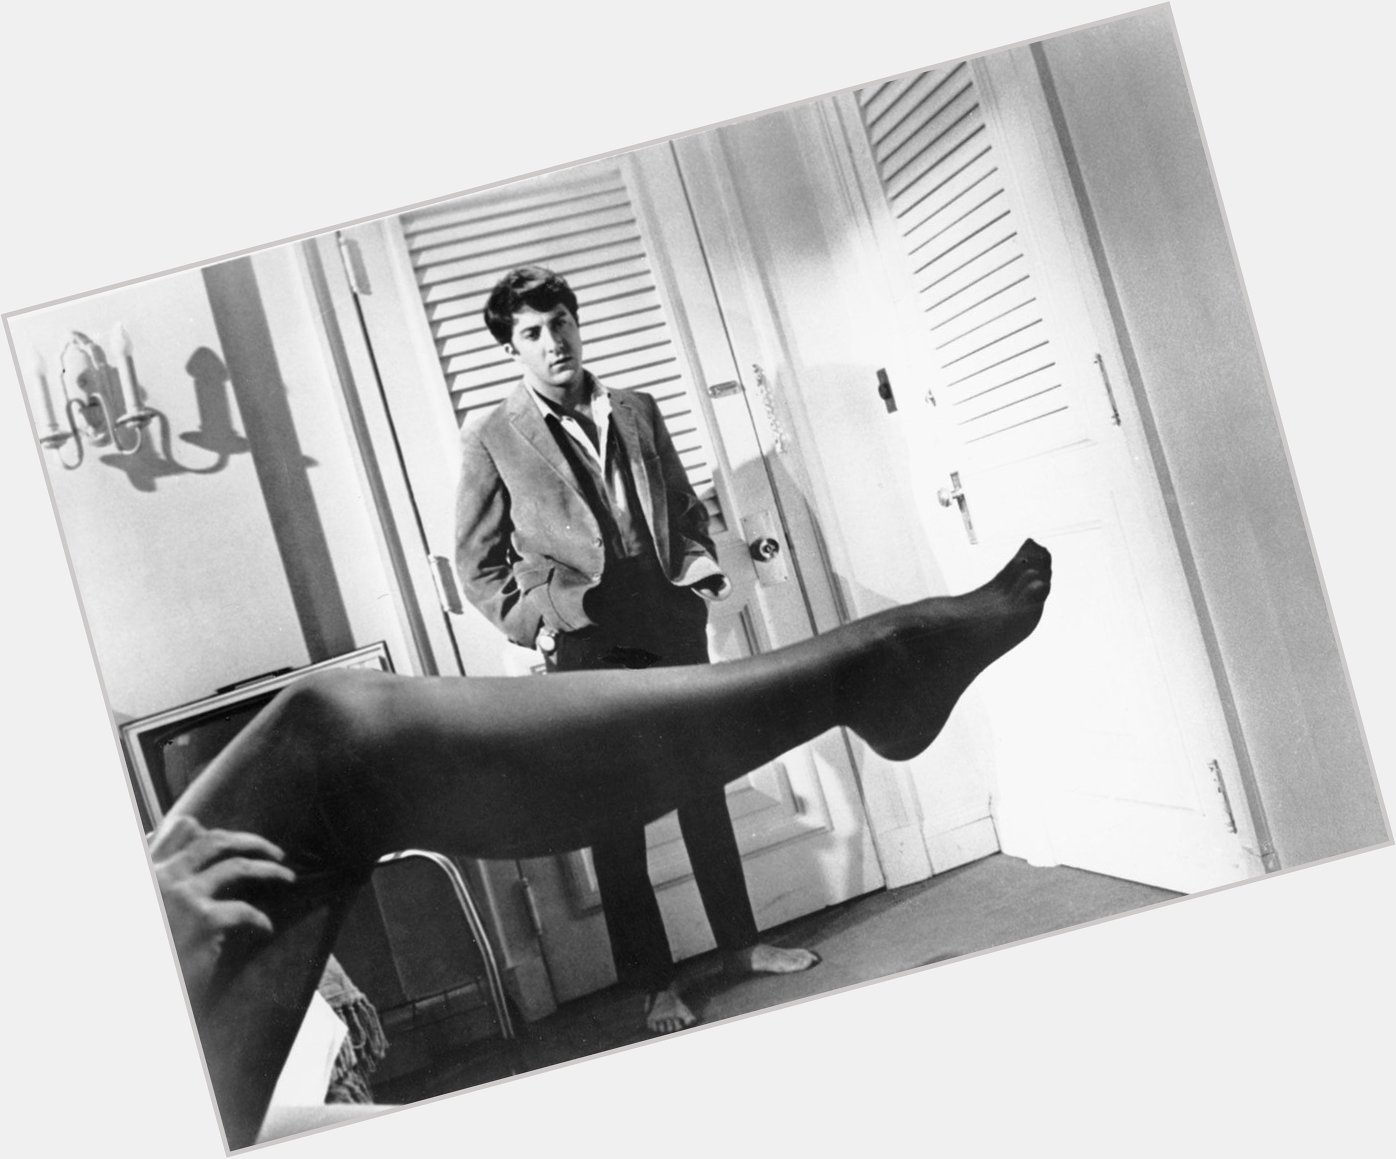 Happy birthday Dustin Hoffman, 81 today! Here playing Benjamin Braddock in The Graduate in 1967. 